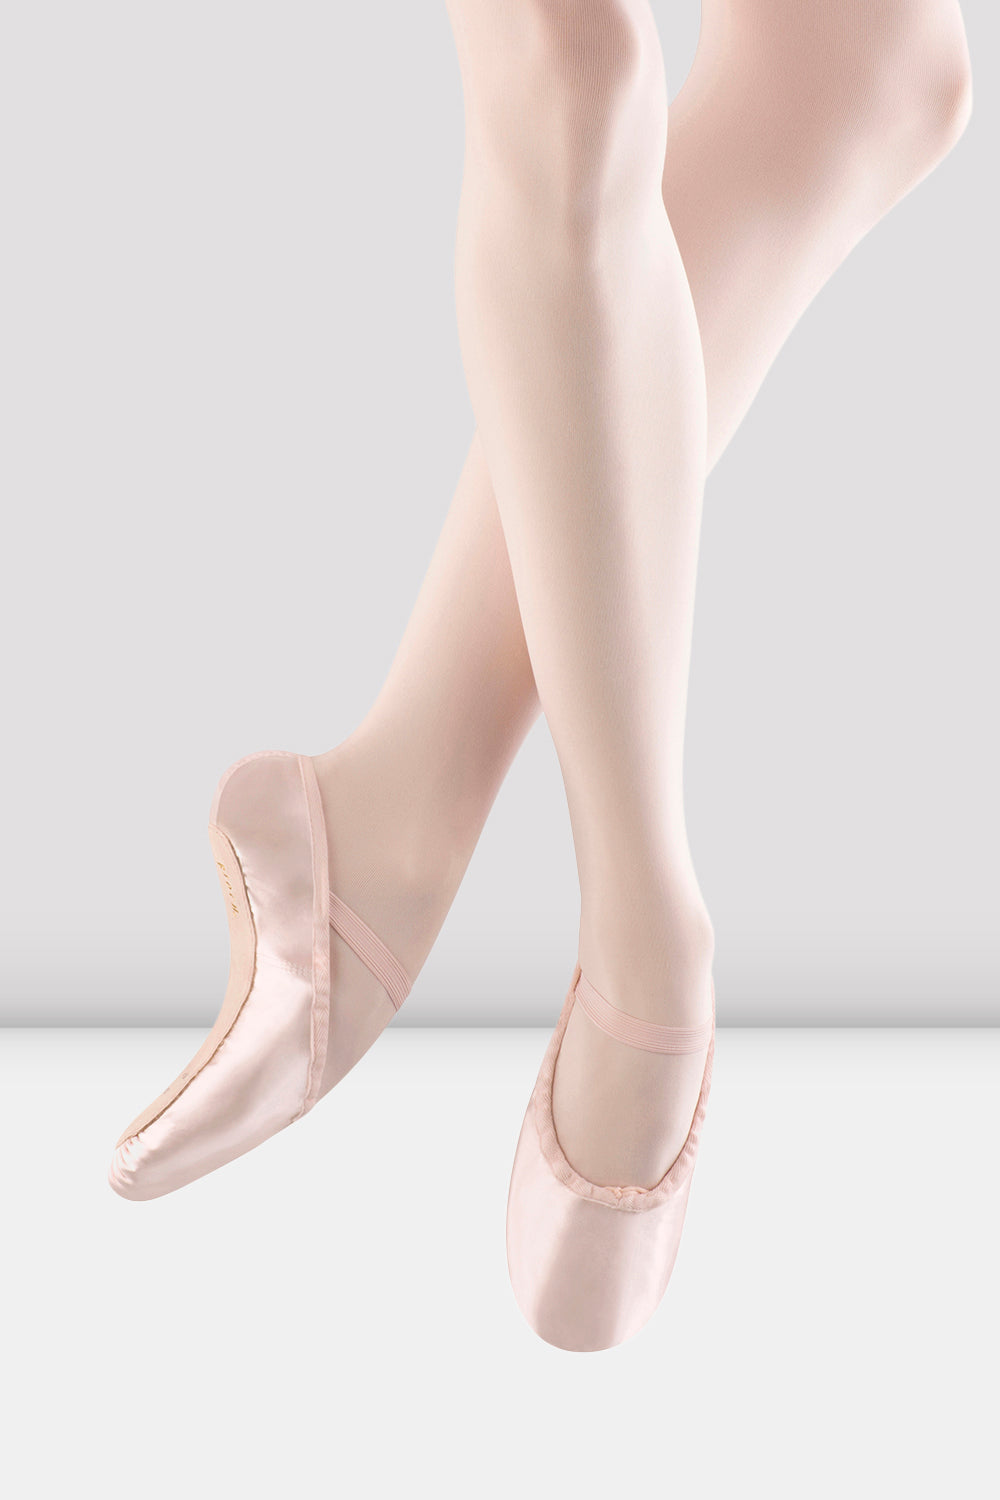 BLOCH Childrens Debut Satin Ballet Shoes, Pink Satin